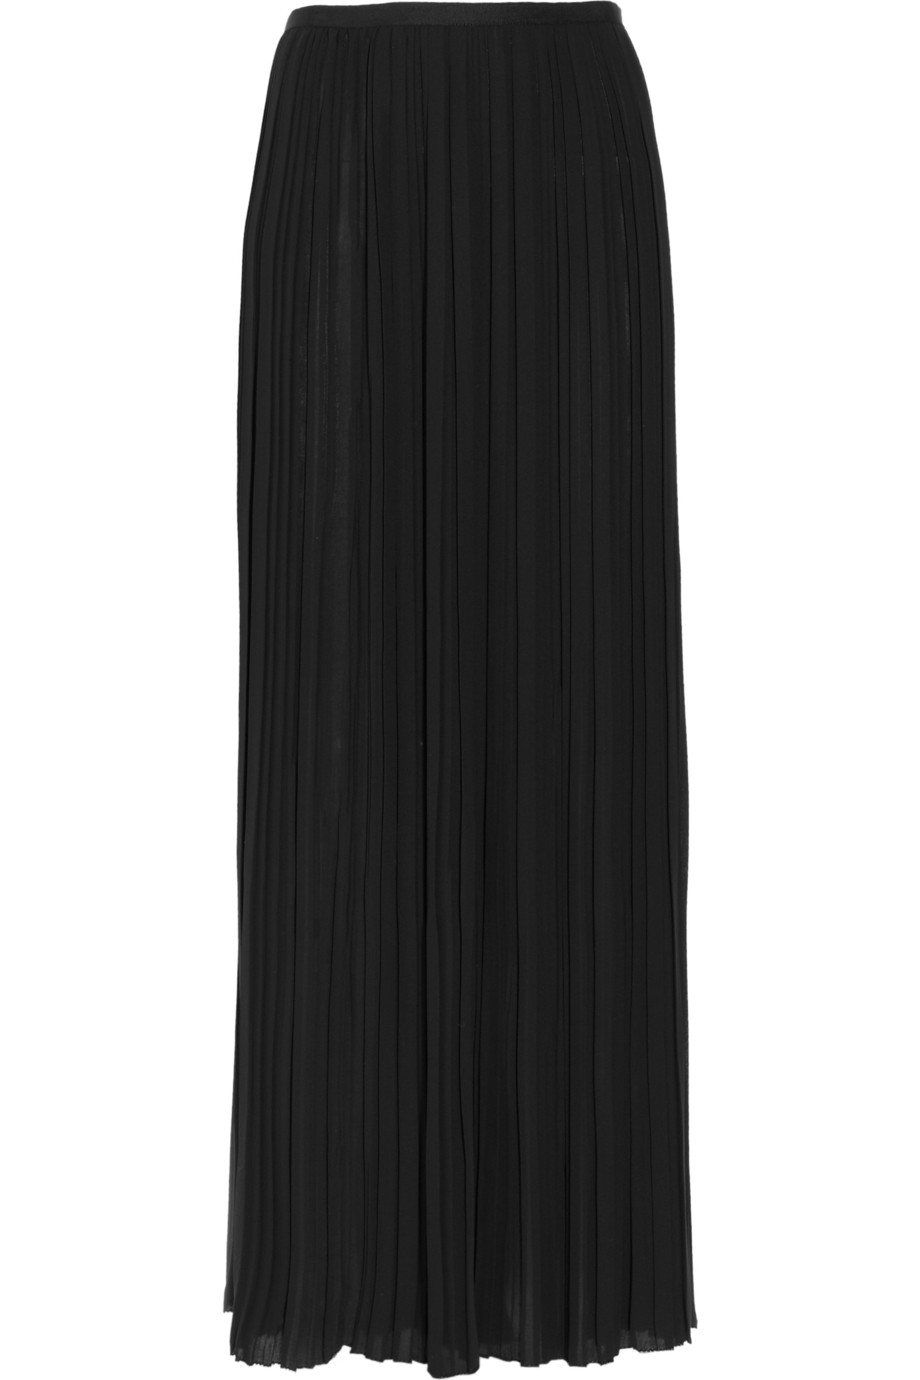 Vince Ponte Asymmetric Faux-Wrap Skirt in Black | Lyst